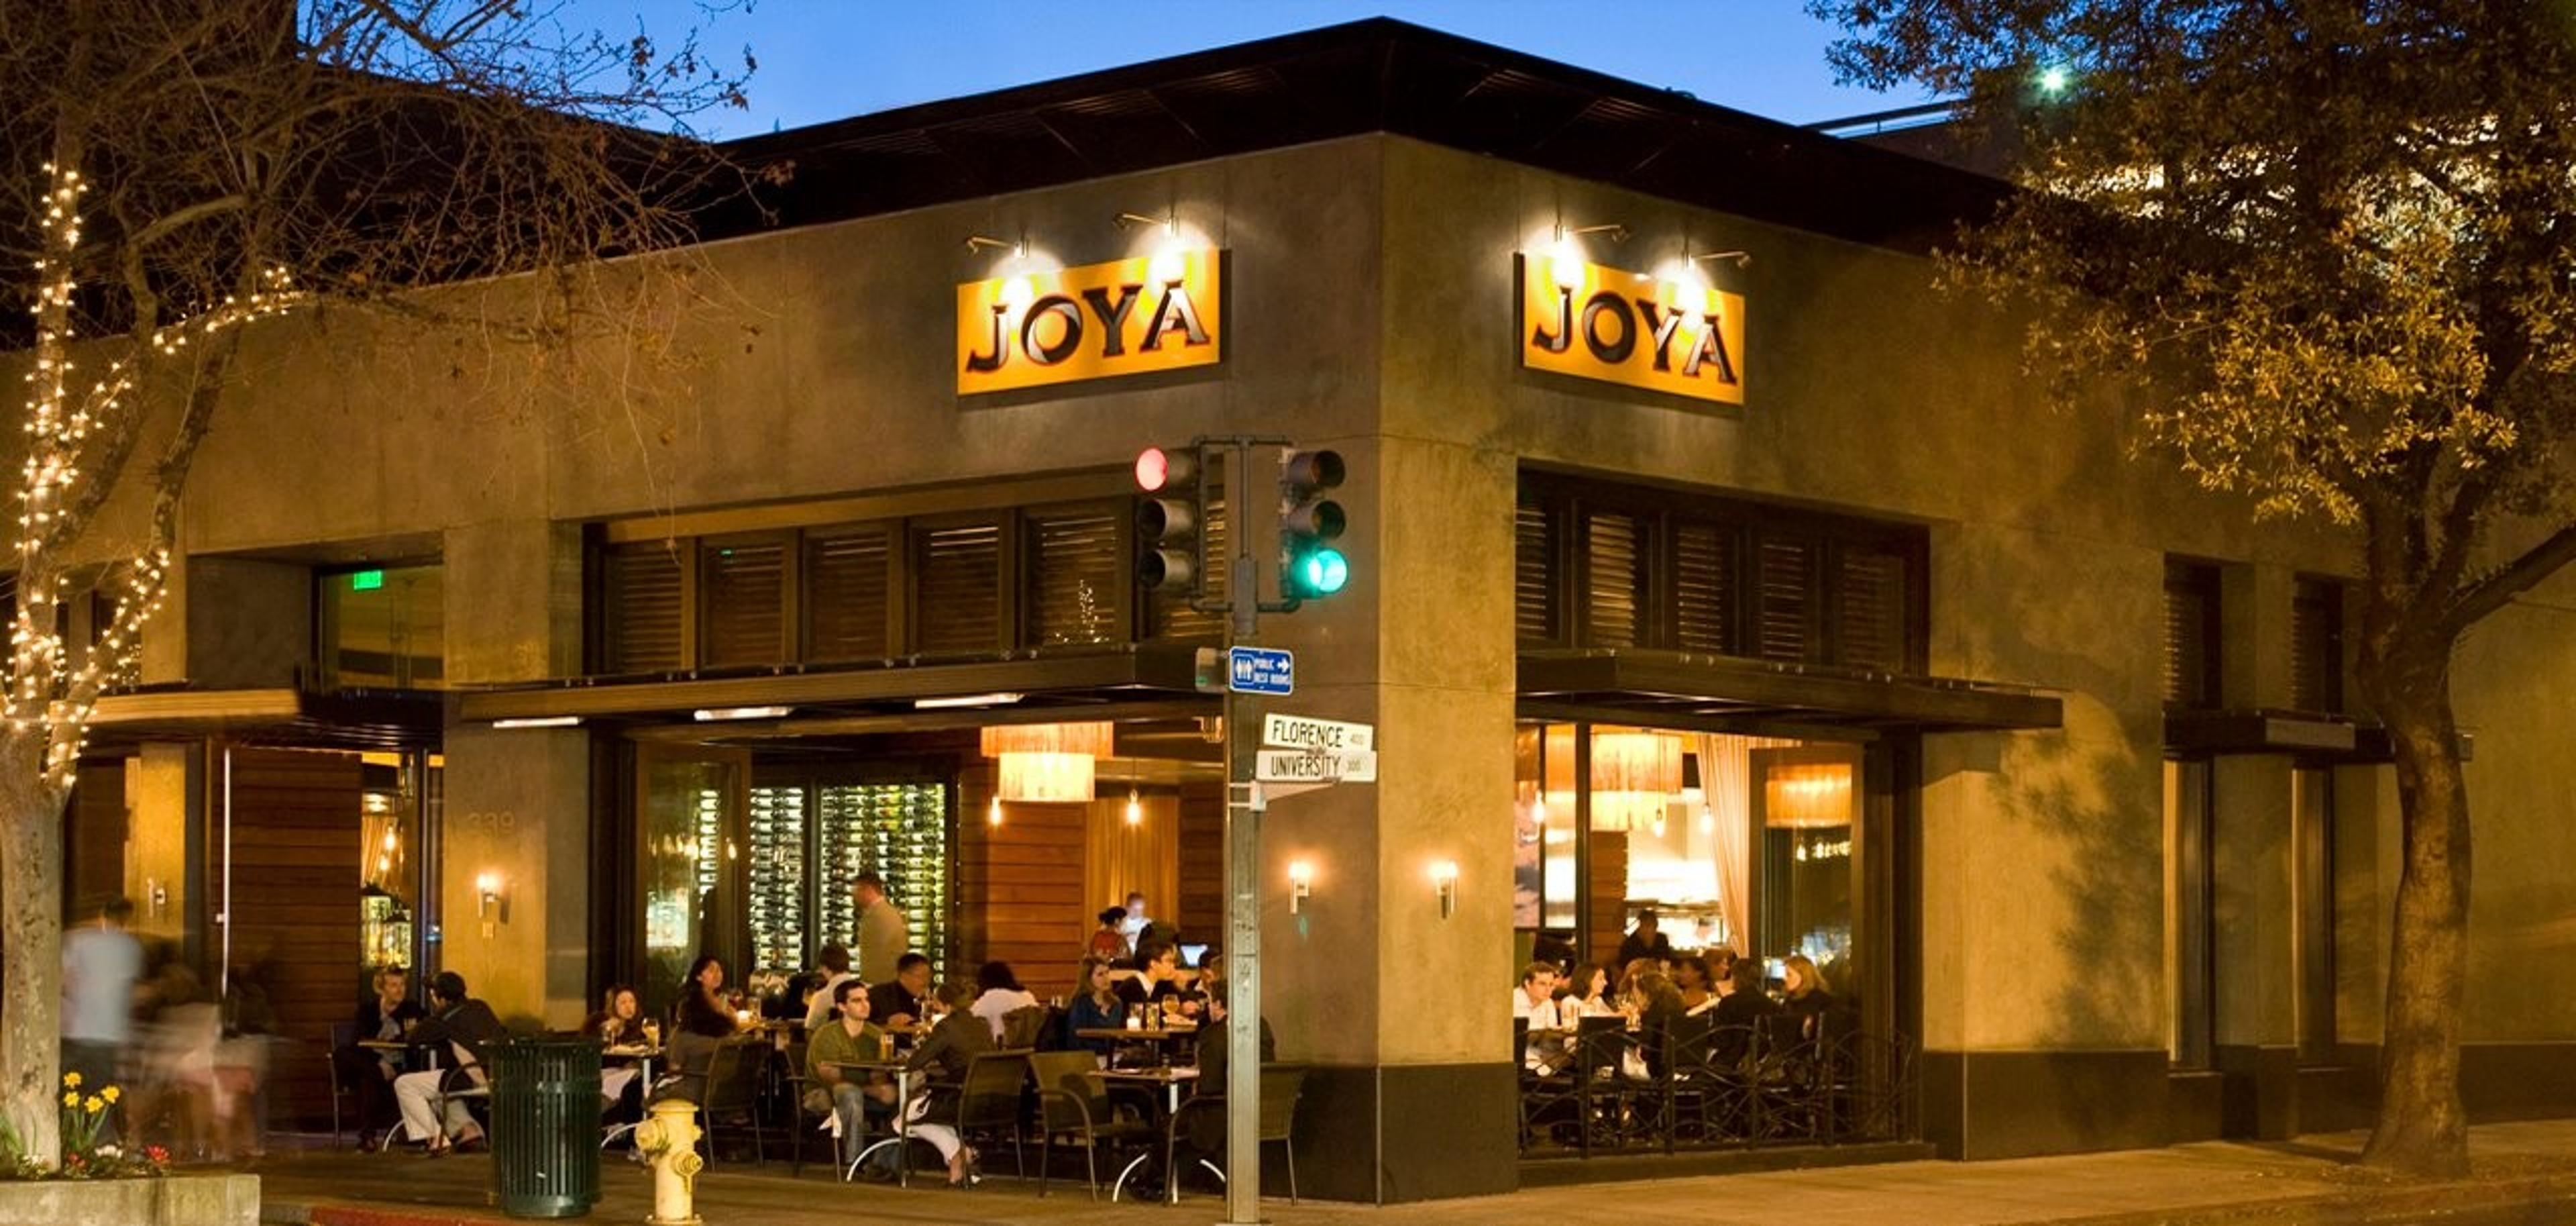 JOYA Restaurant and Lounge in Palo Alto